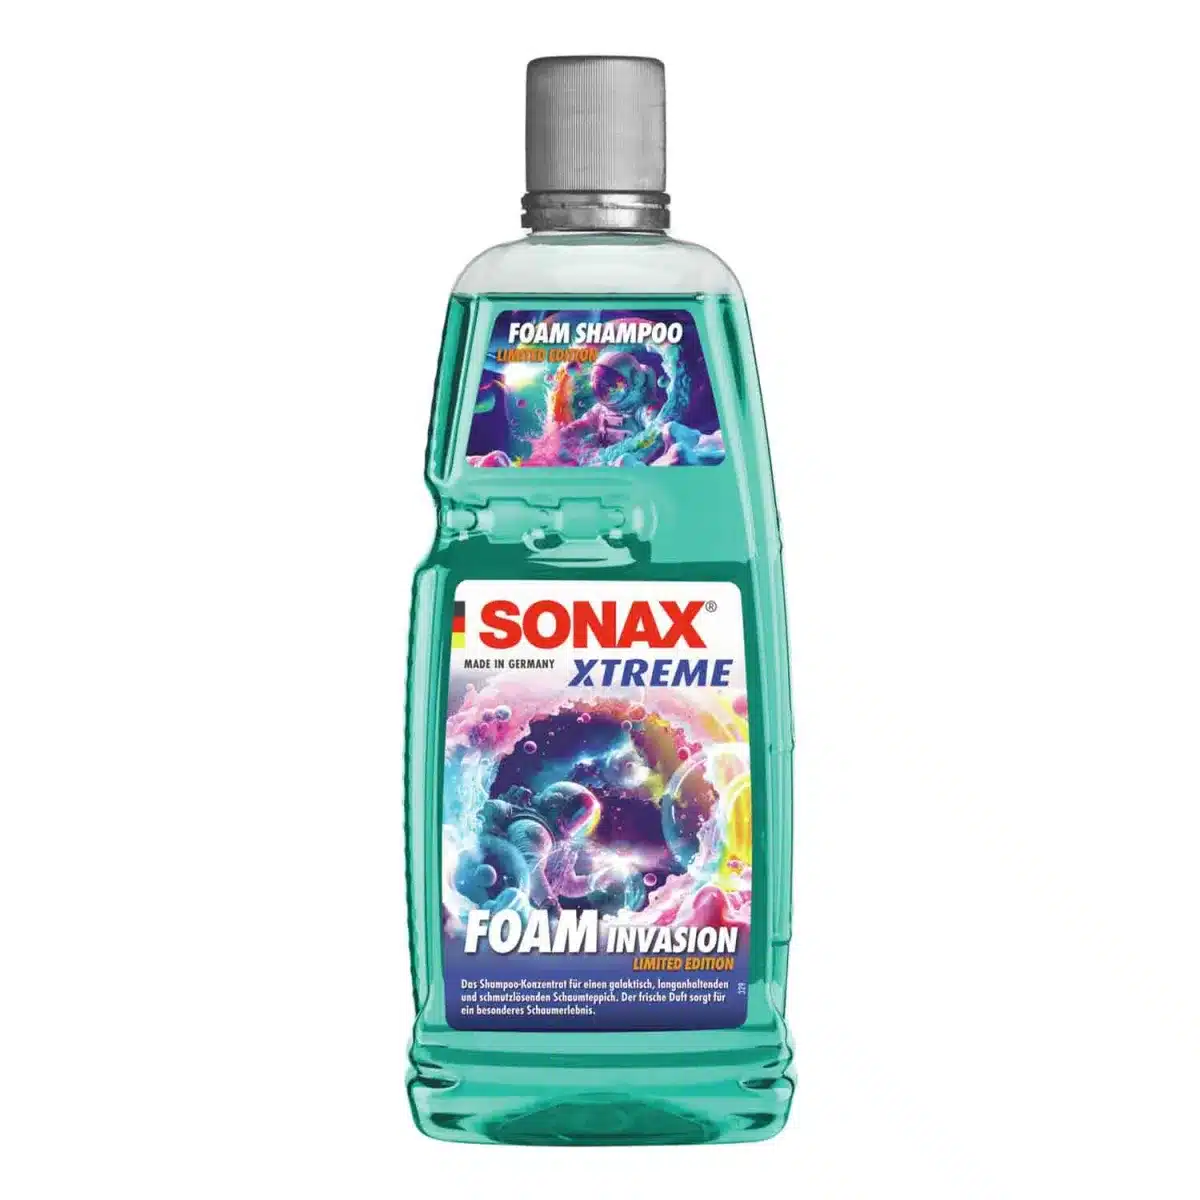 SONAX XTREME FoamInvasion Shampoo 1 Liter